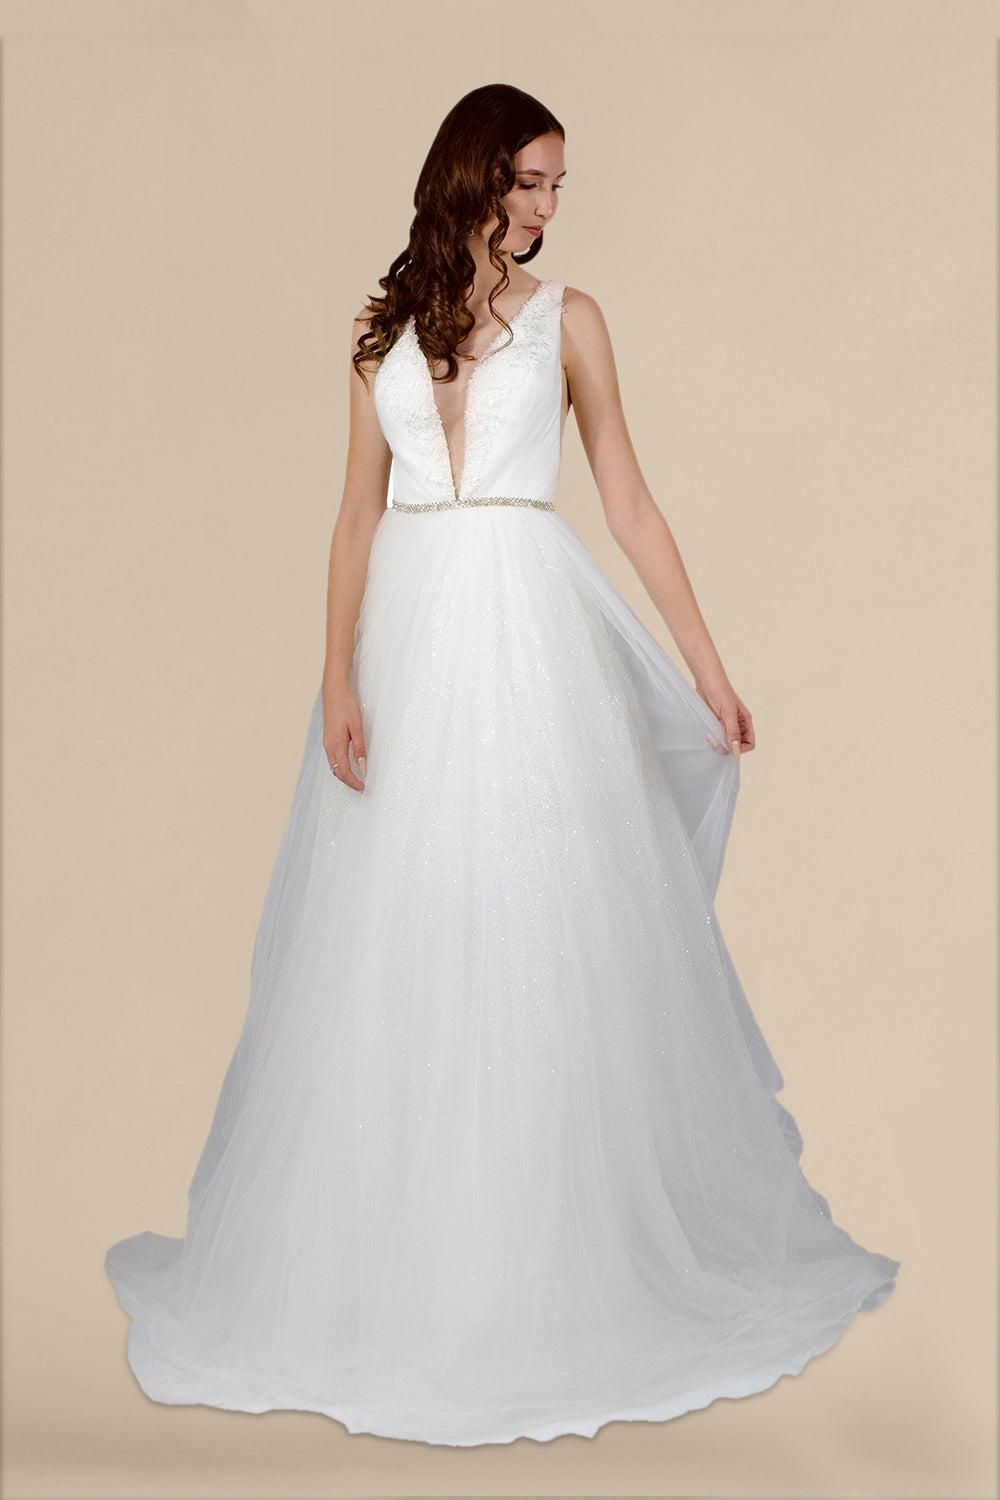 custom wedding dress dressmaker A line wedding gowns perth australia envious bridal & formal